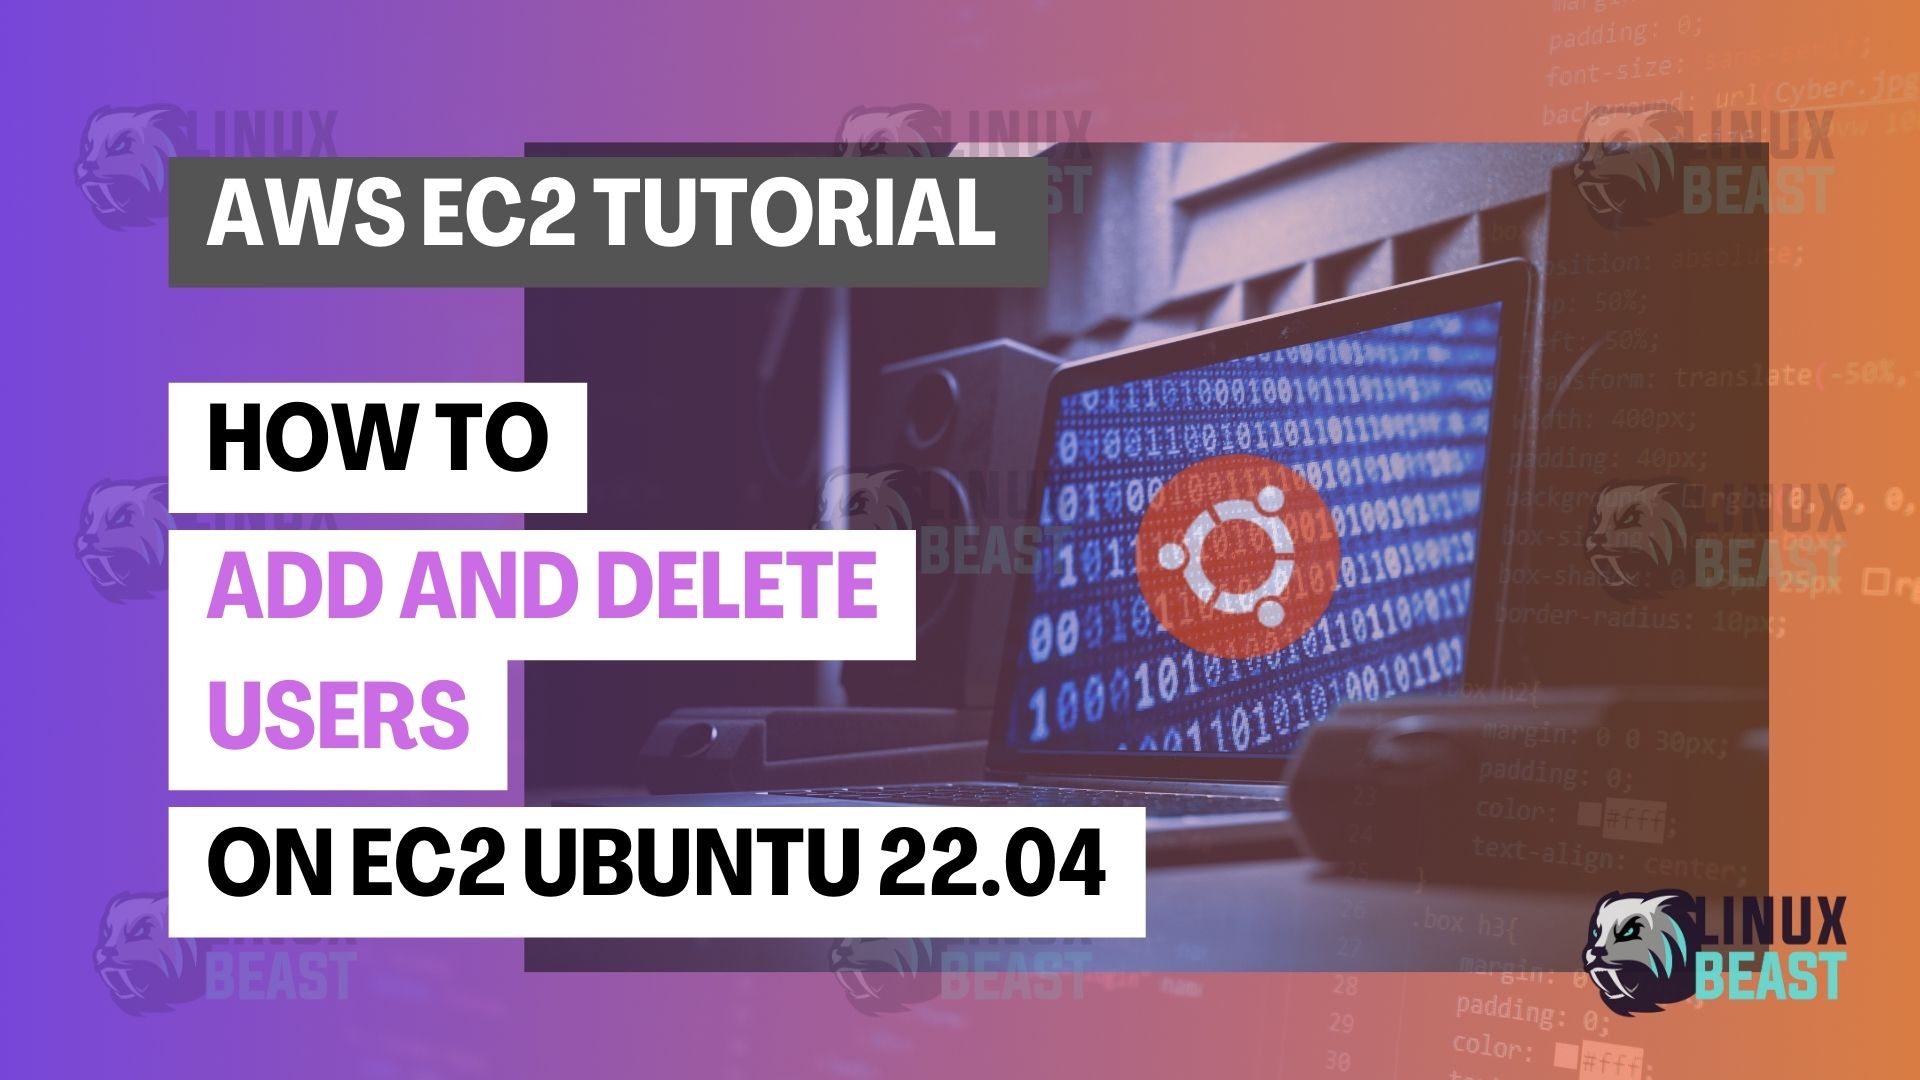 How to Add and Delete Users on EC2 Ubuntu 22.04